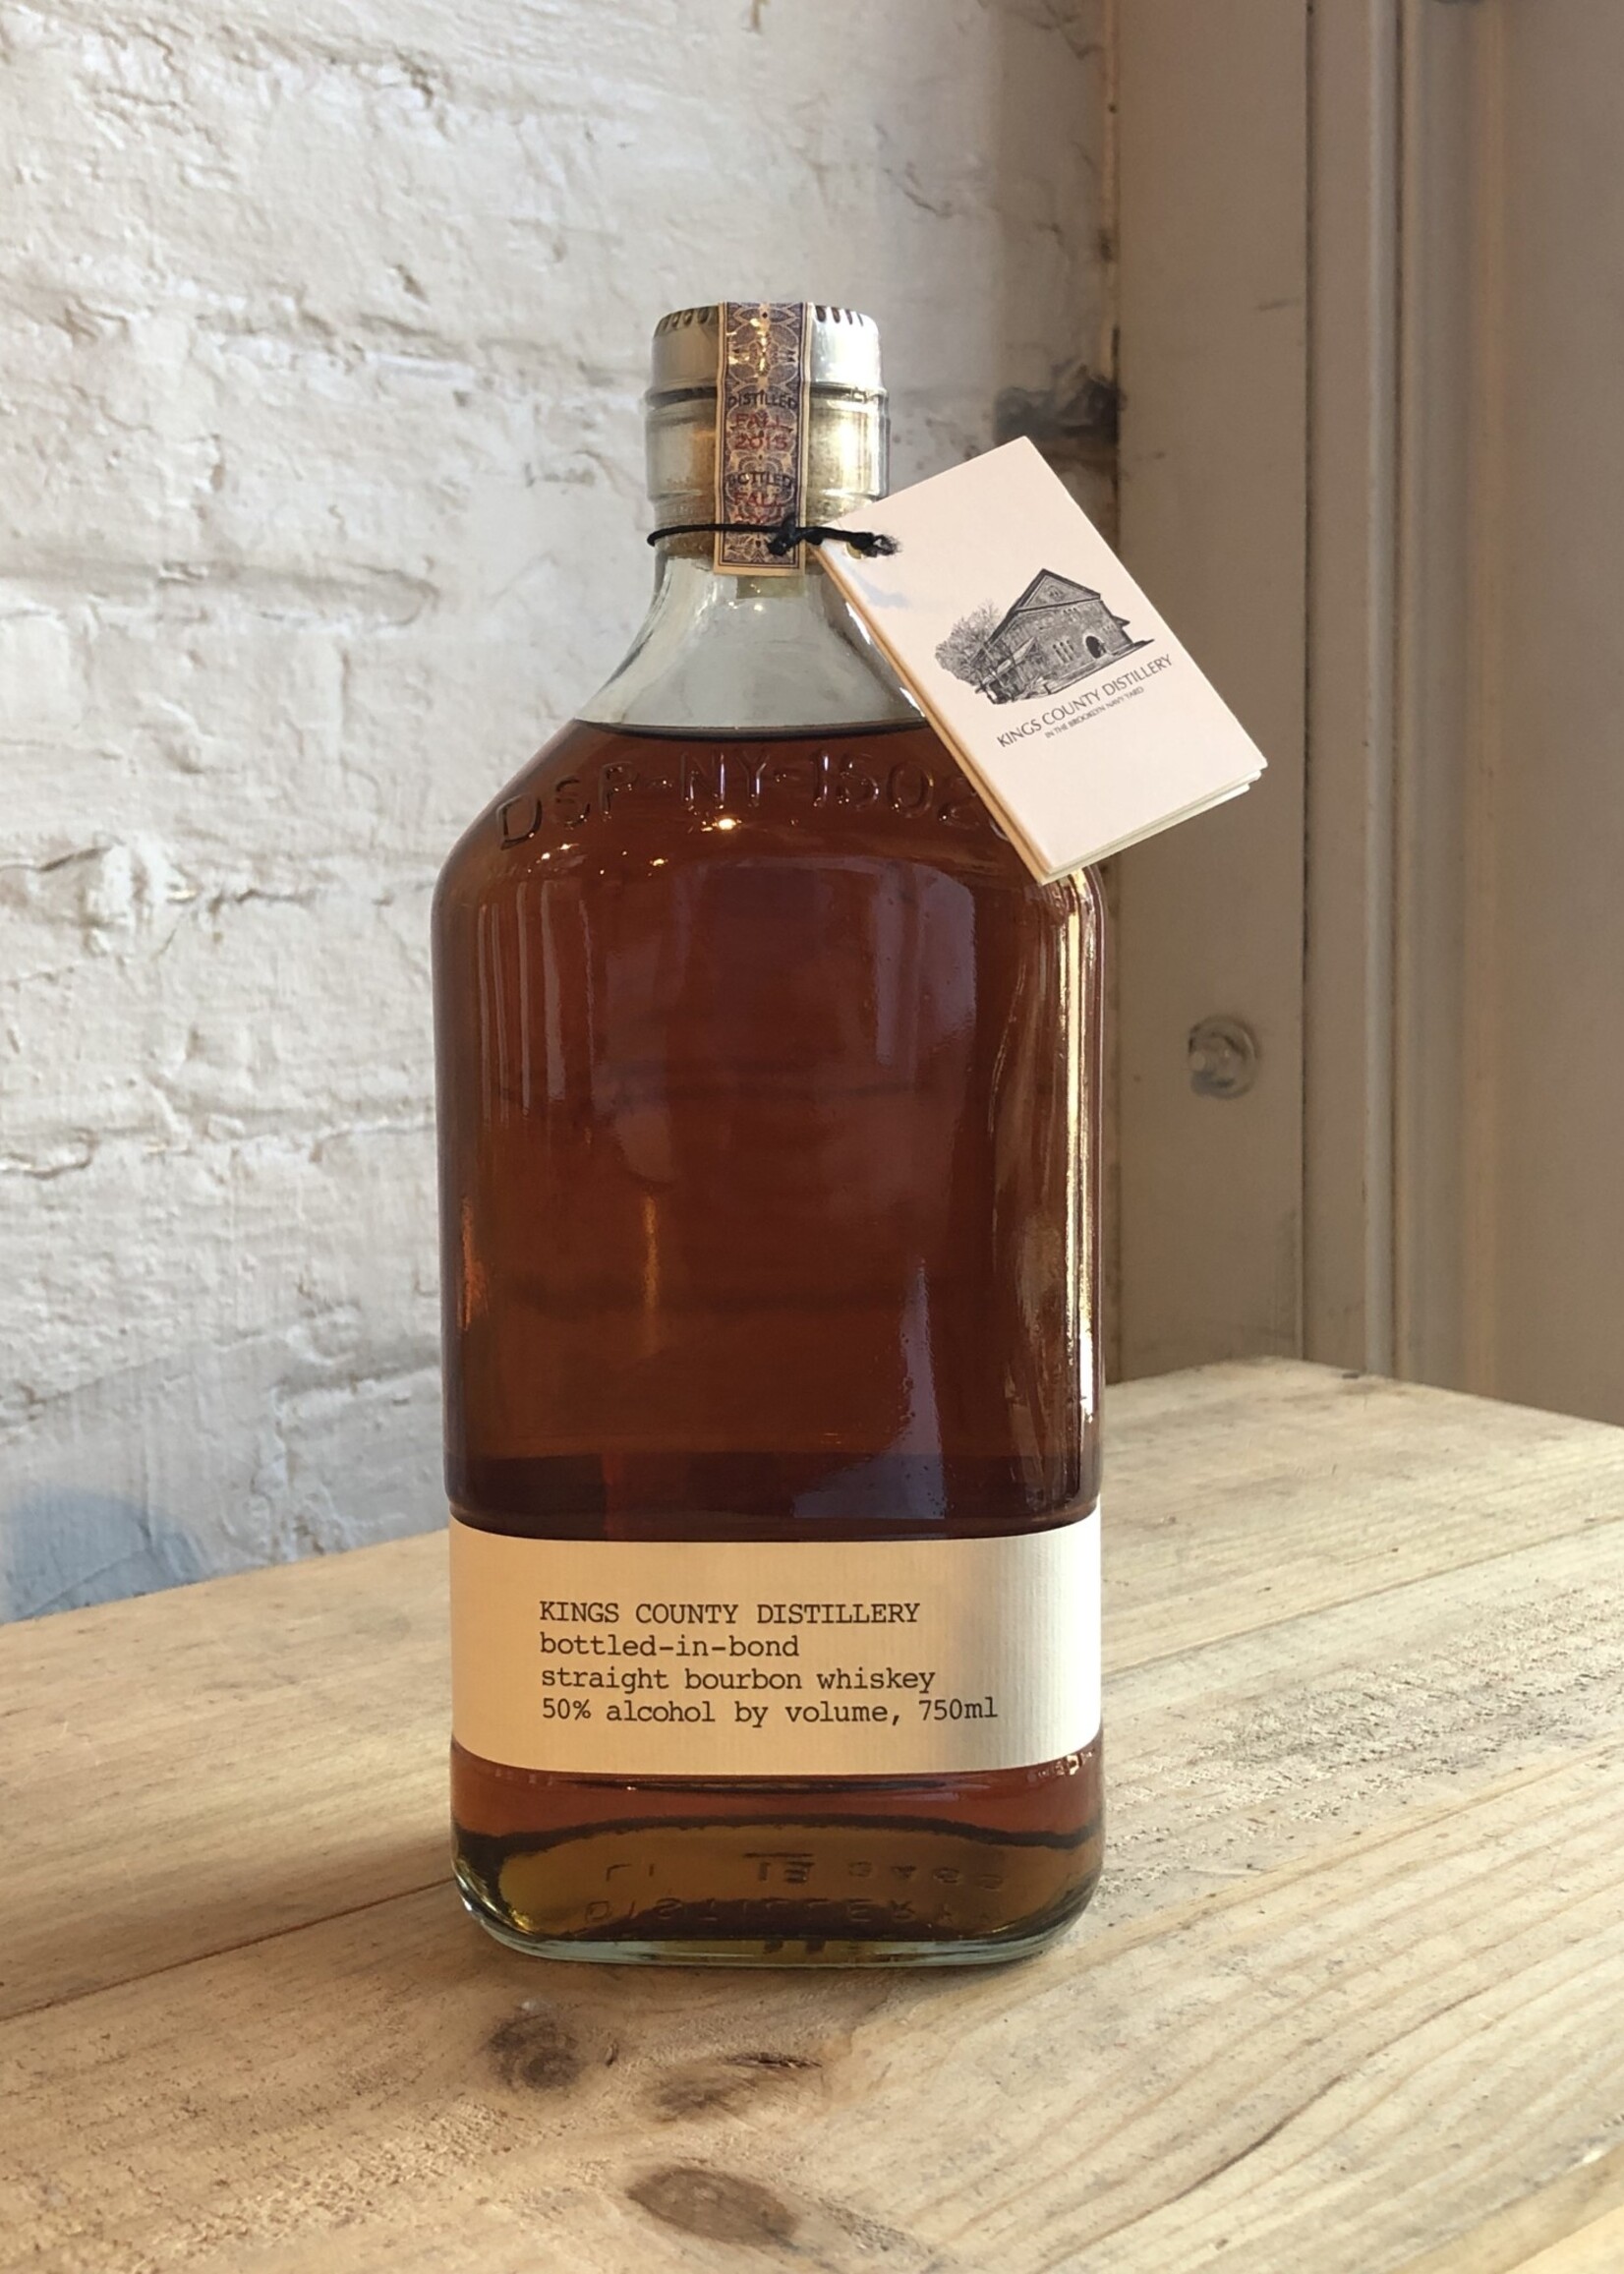 Kings County Distillery 6yr Bottled-in-Bond Straight Bourbon #11 Whiskey - Brooklyn, NY (750ml)